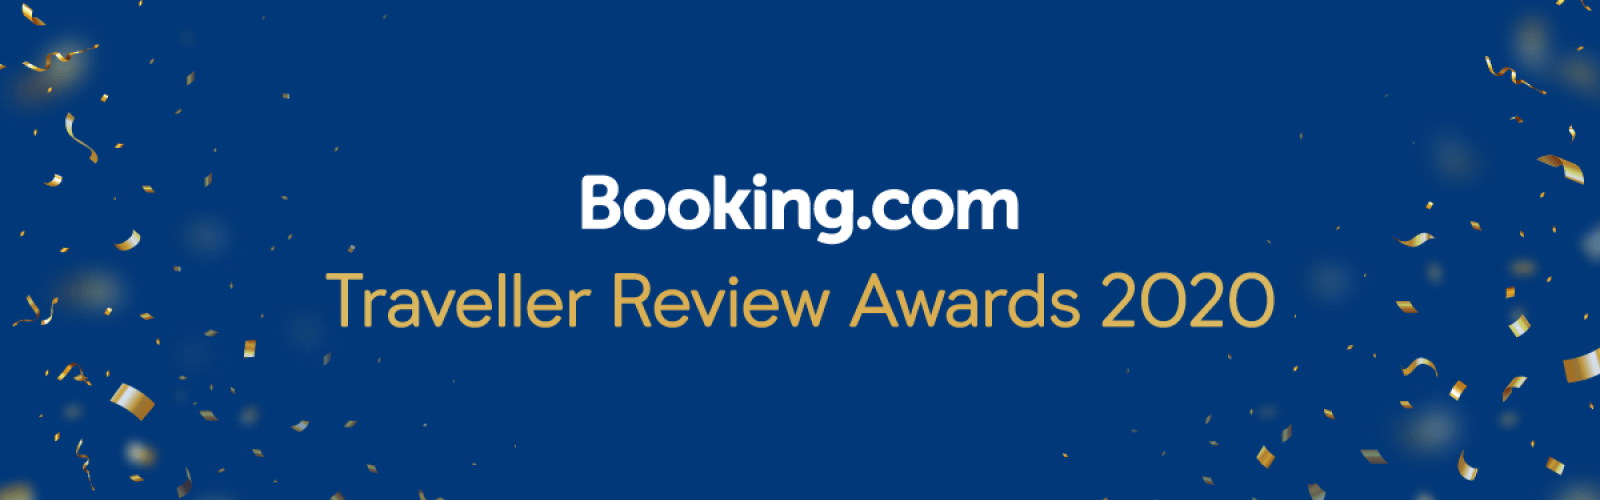 traveller-review-awards-2020